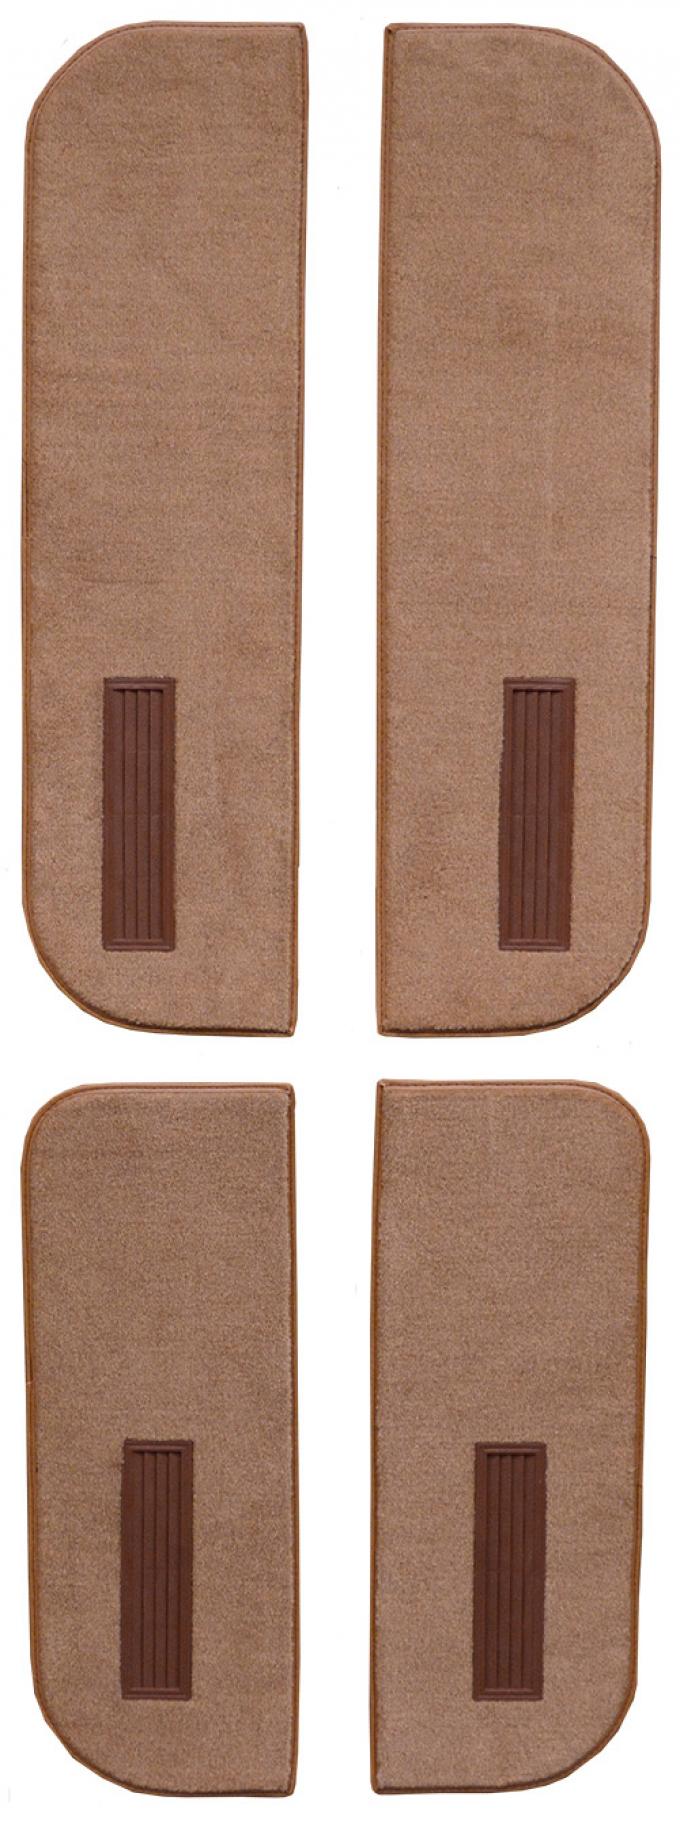 ACC 1975-1978 GMC K25 Suburban Door Panel Inserts on Cardboard w/Vents 4pc Cutpile Carpet